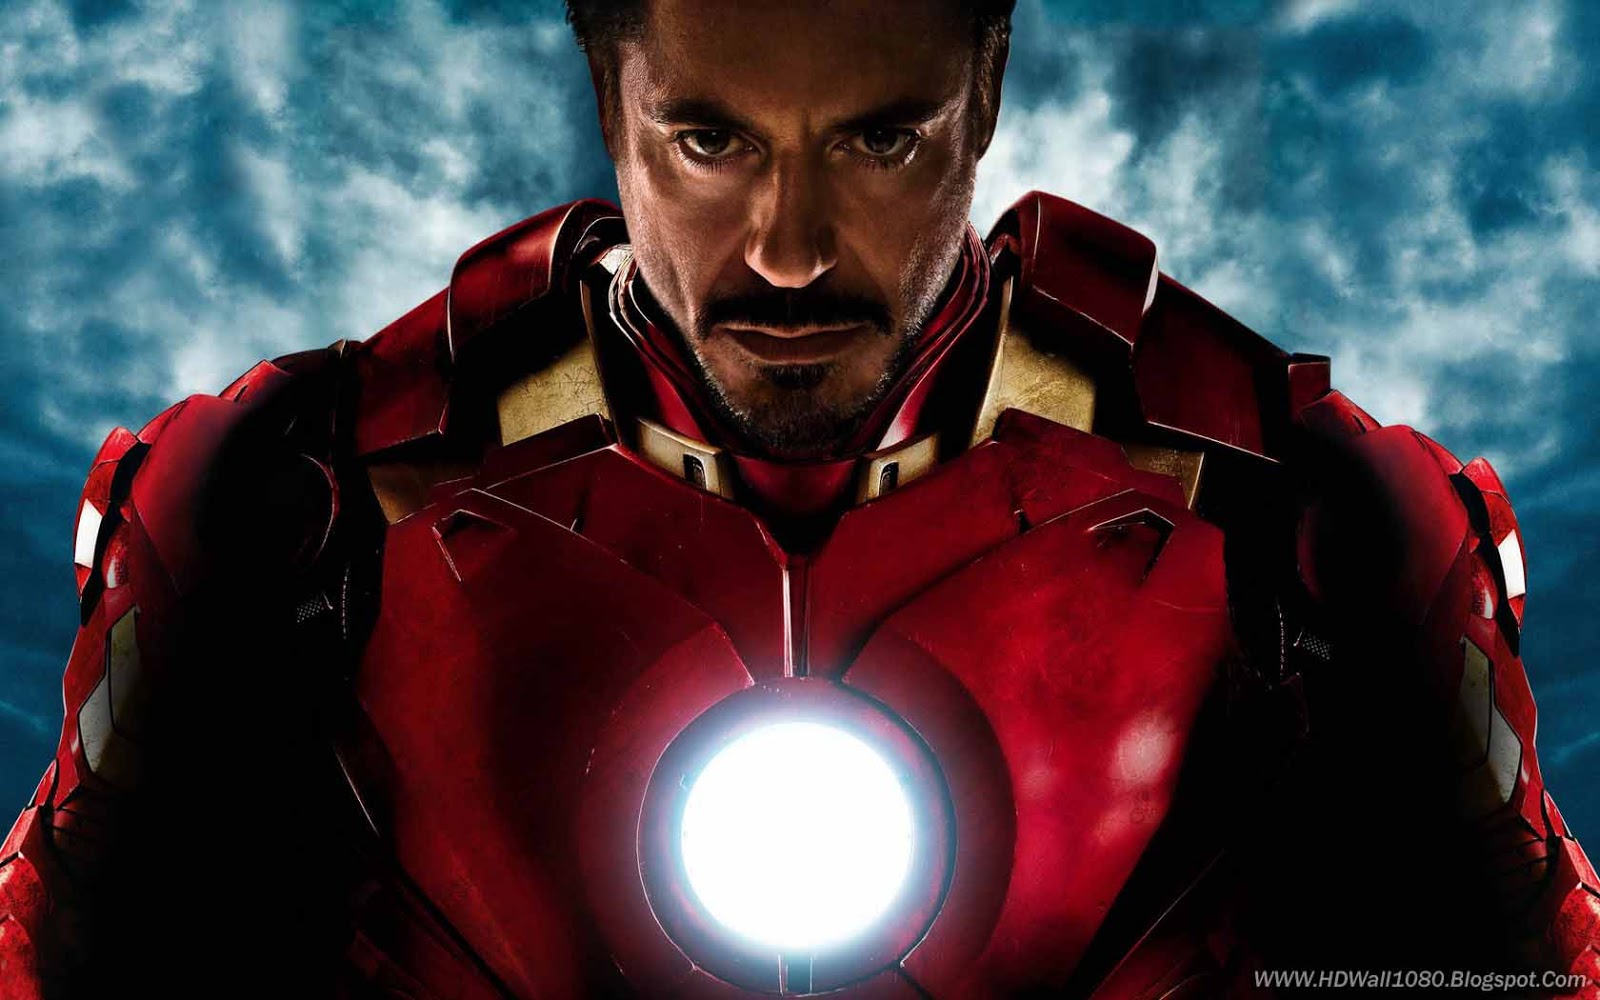 https://blogger.googleusercontent.com/img/b/R29vZ2xl/AVvXsEgfoOBS7kNuf7qBXlKPKuf92gi0oyqyNlu4IvksEYROFf7Qs6VEzqLqq5kYjHw2Oeofe5jcXeTeqBMSNK99UplytMMdazmXdS2ulp2uE2w68FUFAJcUB9XcpTX01SIHx4MSXjgTG-w3fwu1/s1600/The+Avengers+Iron+Man.jpg